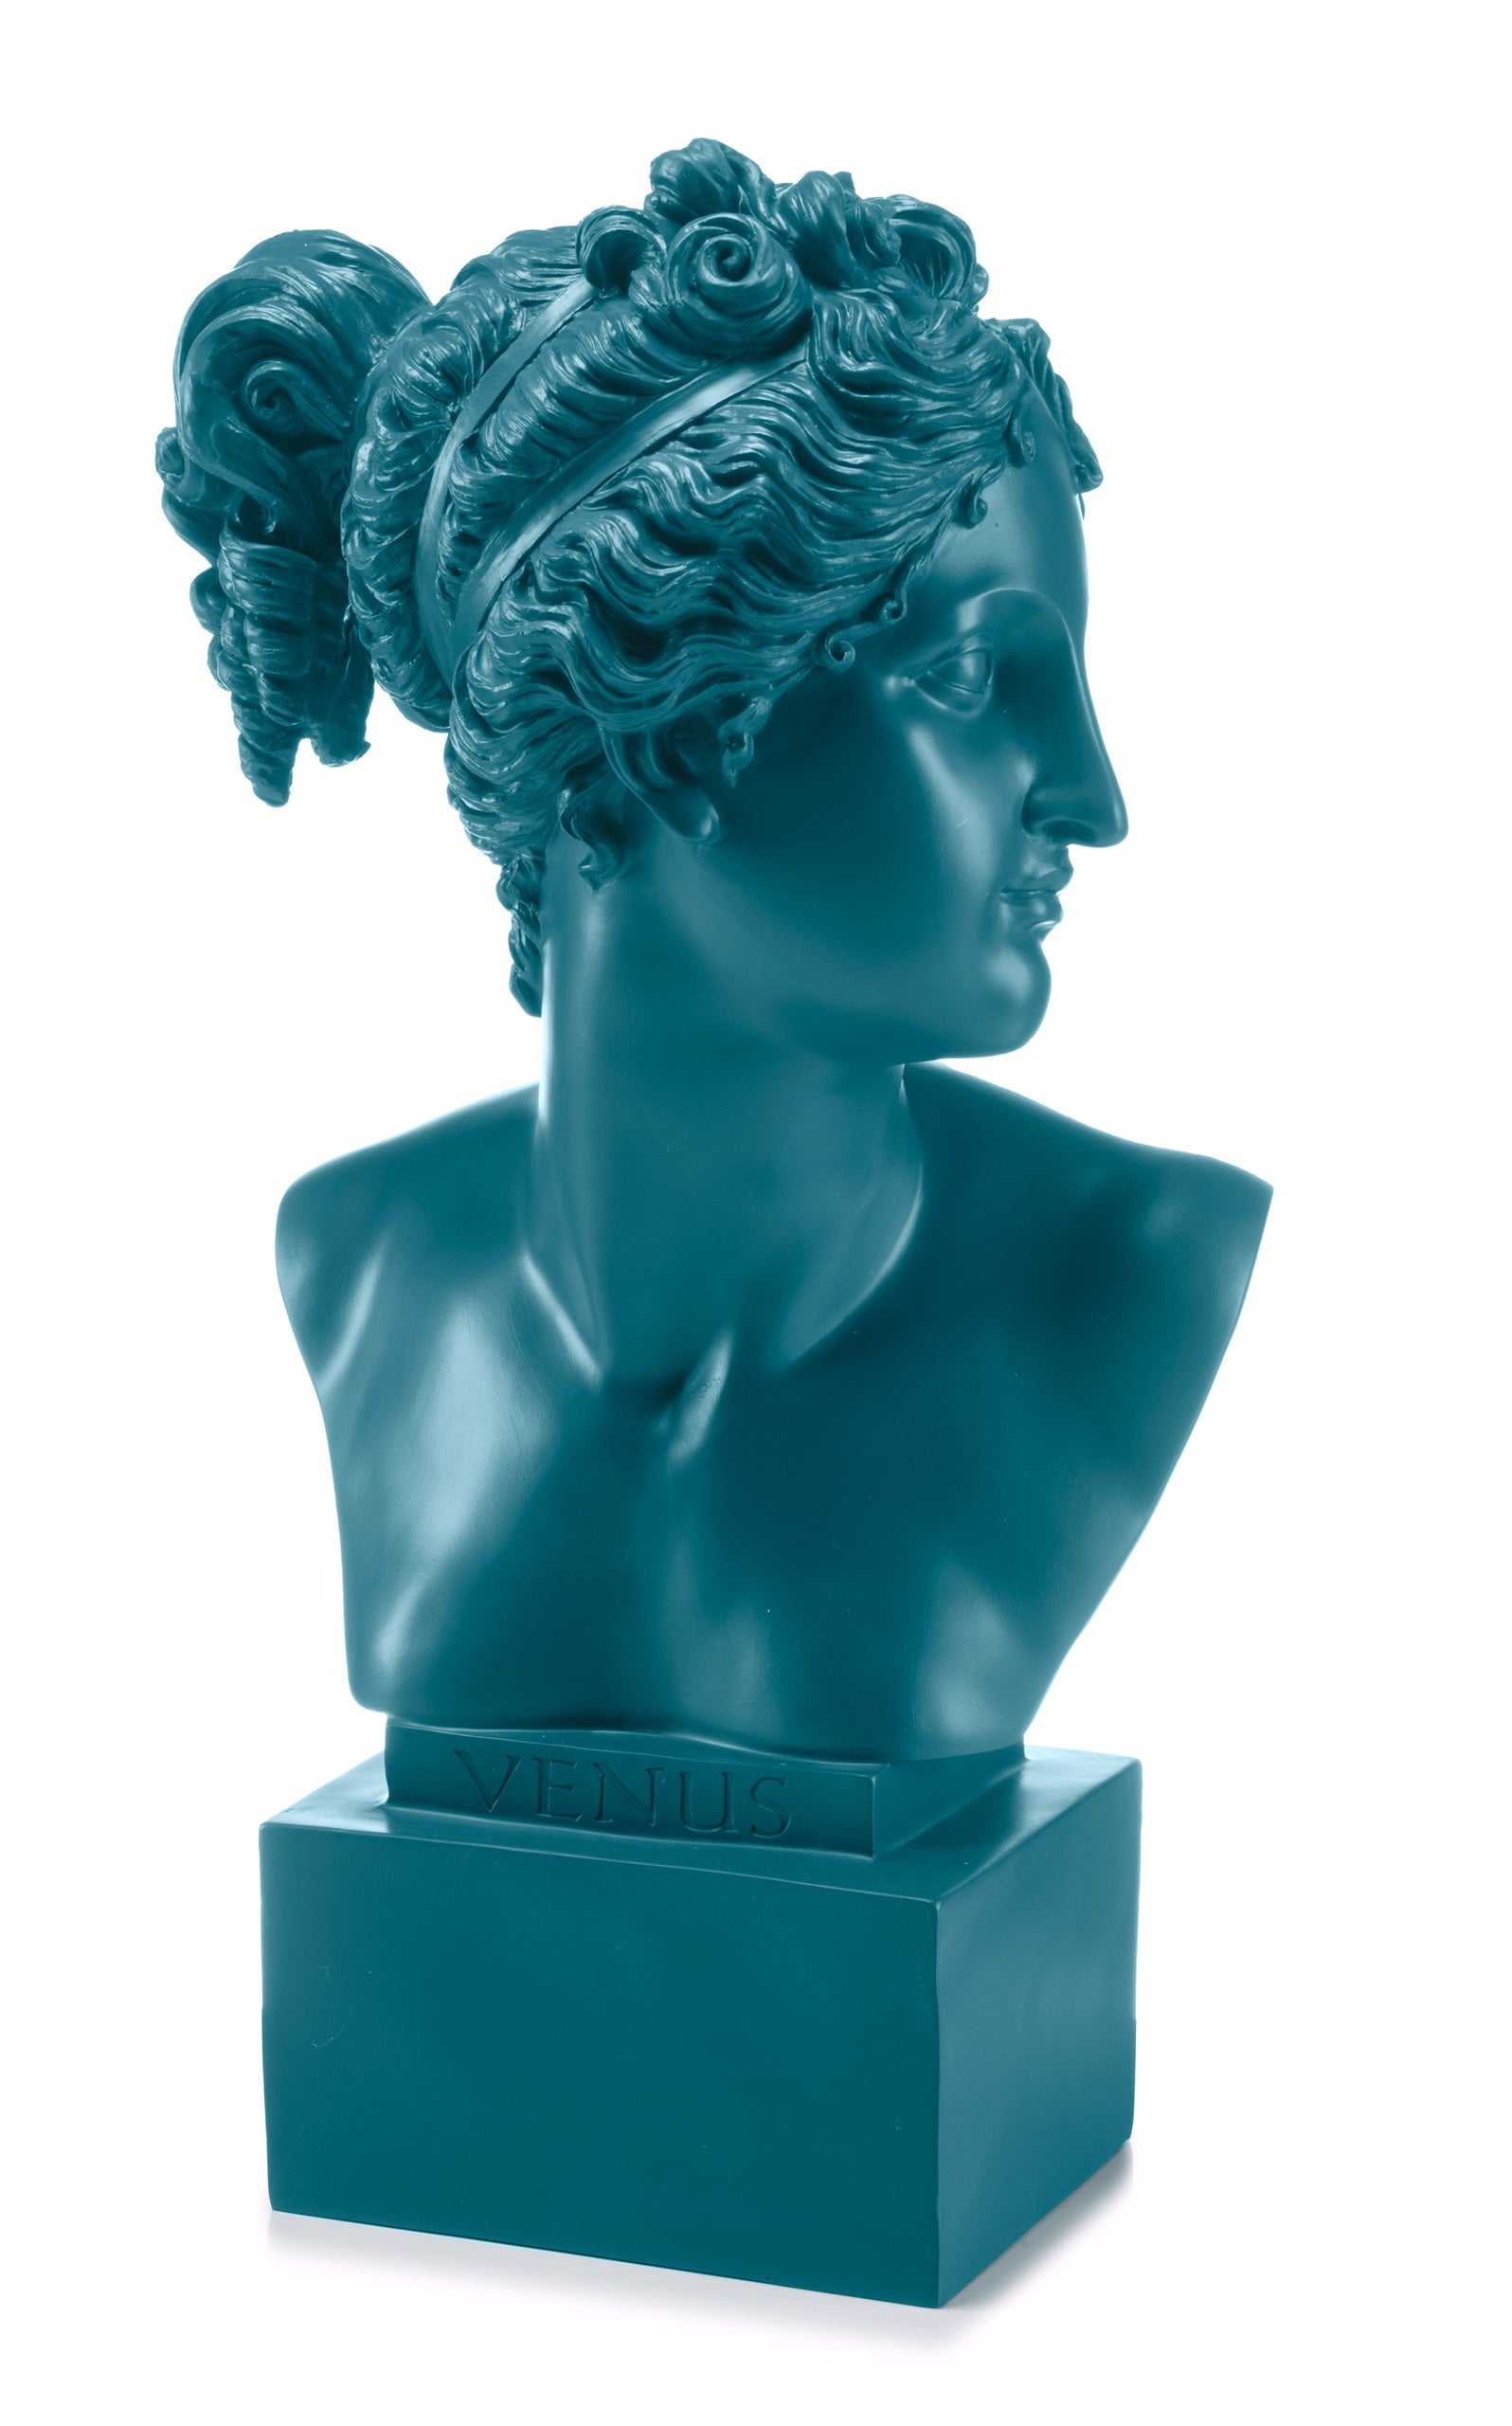 Palais Royal Bellimbusti Busto Venere, 36 cm